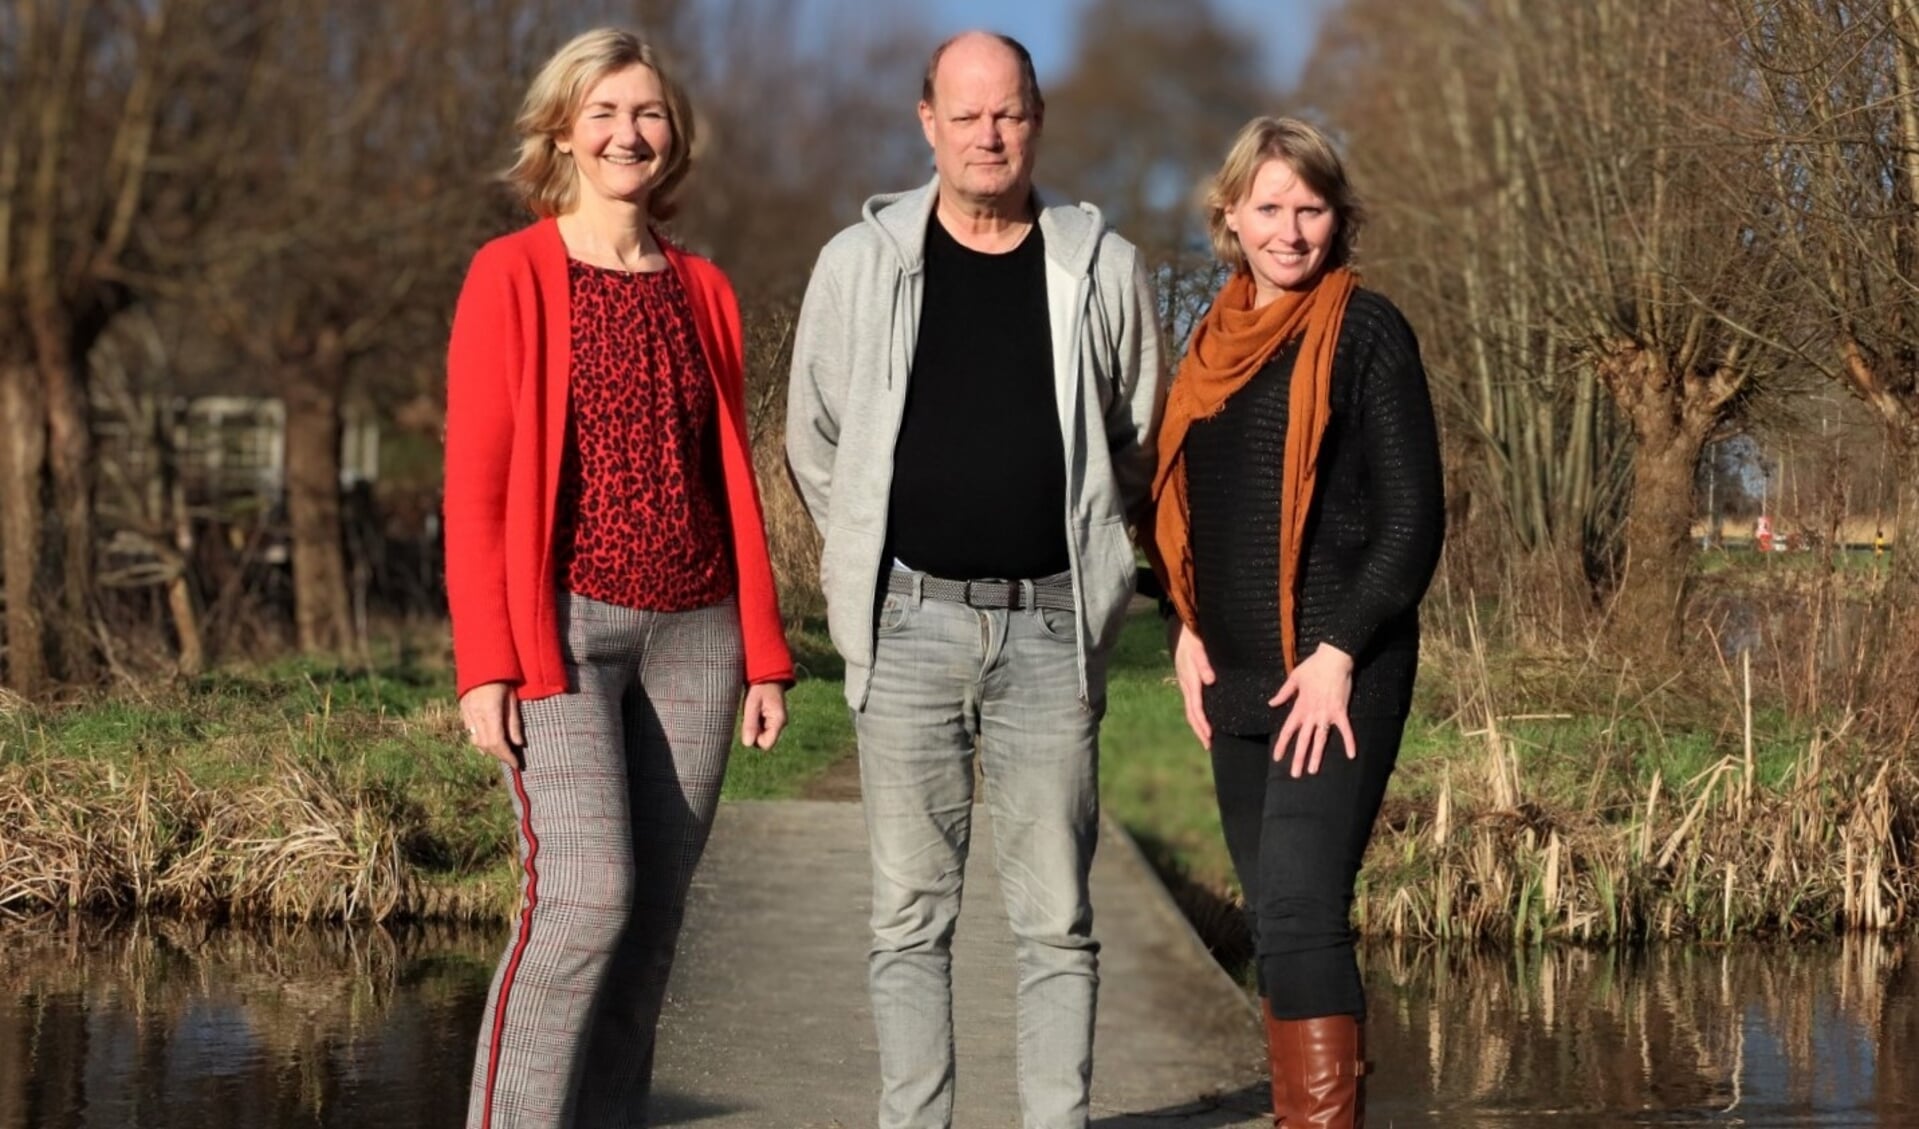 De activiteitencommissie v.l.n.r: Yolande Heerkens, Kees Dessing en Esther Kleijn